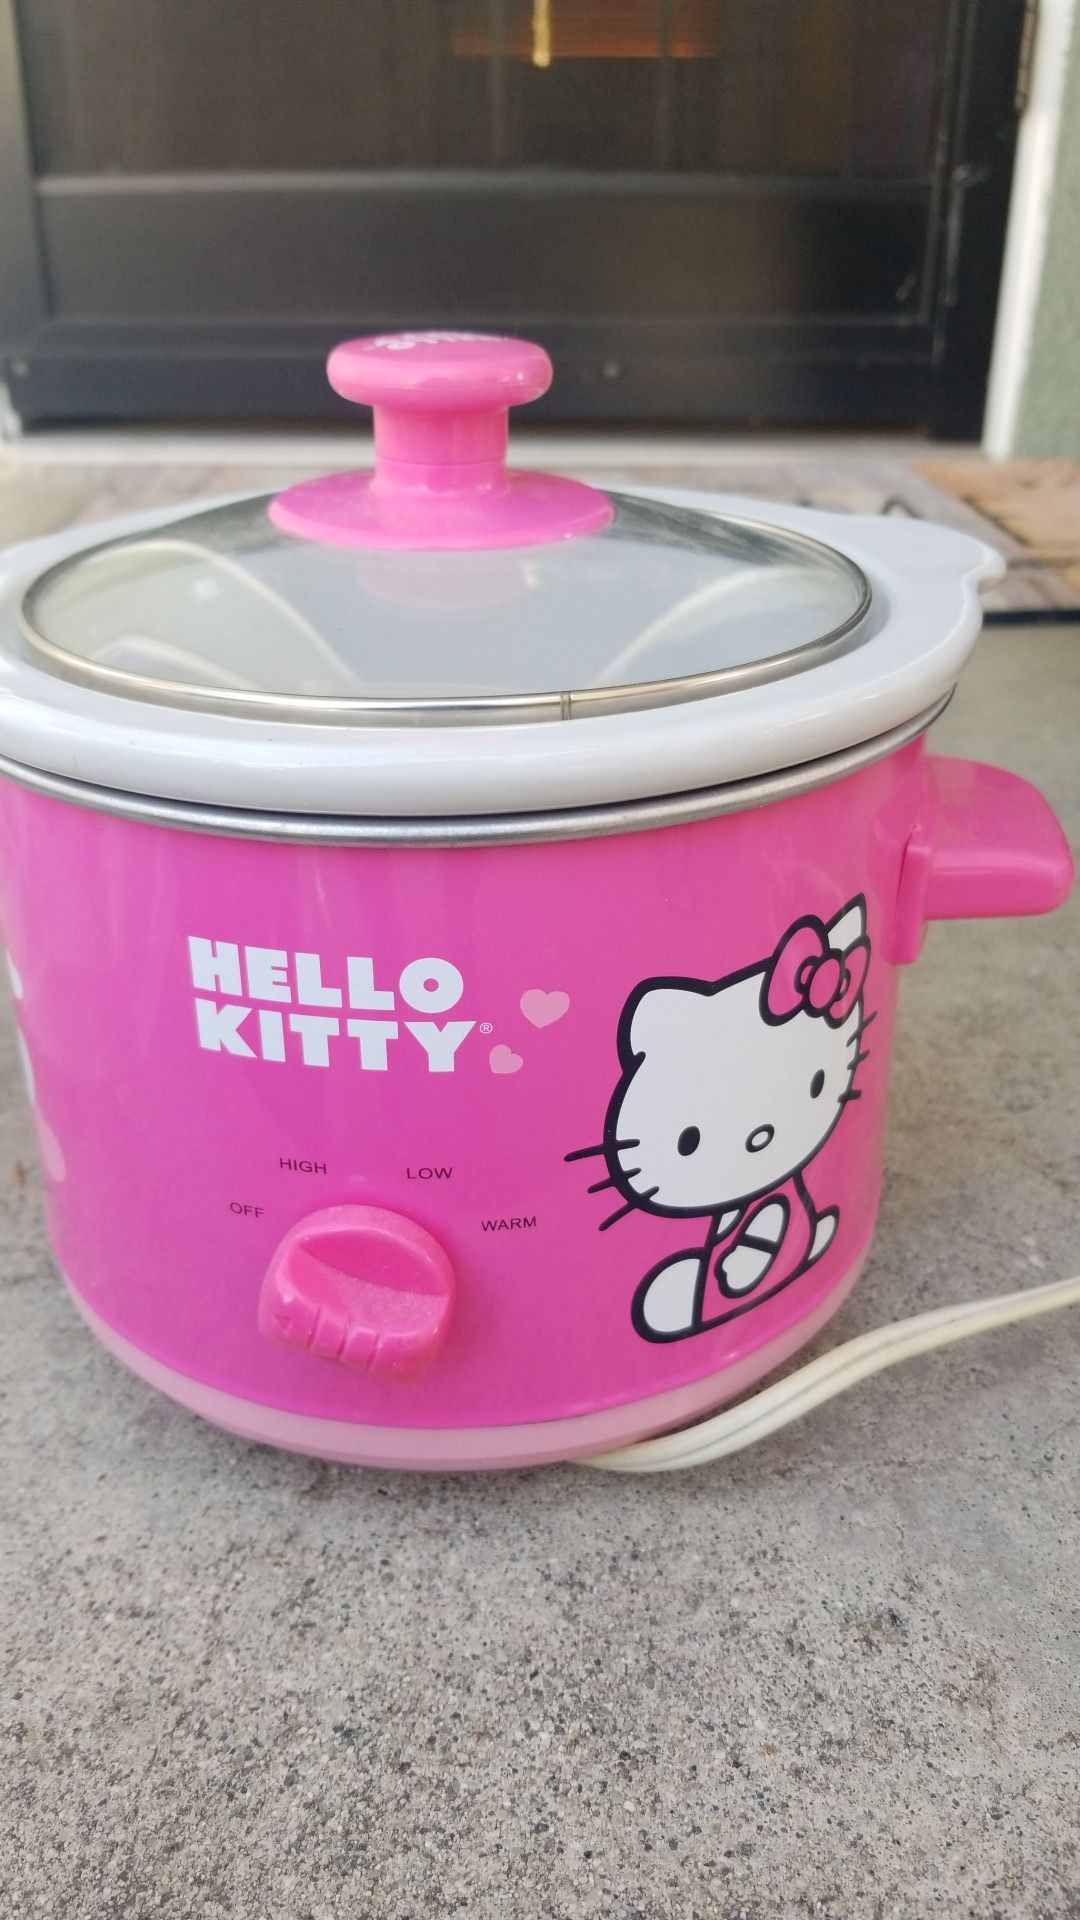 Hello kitty crock pot